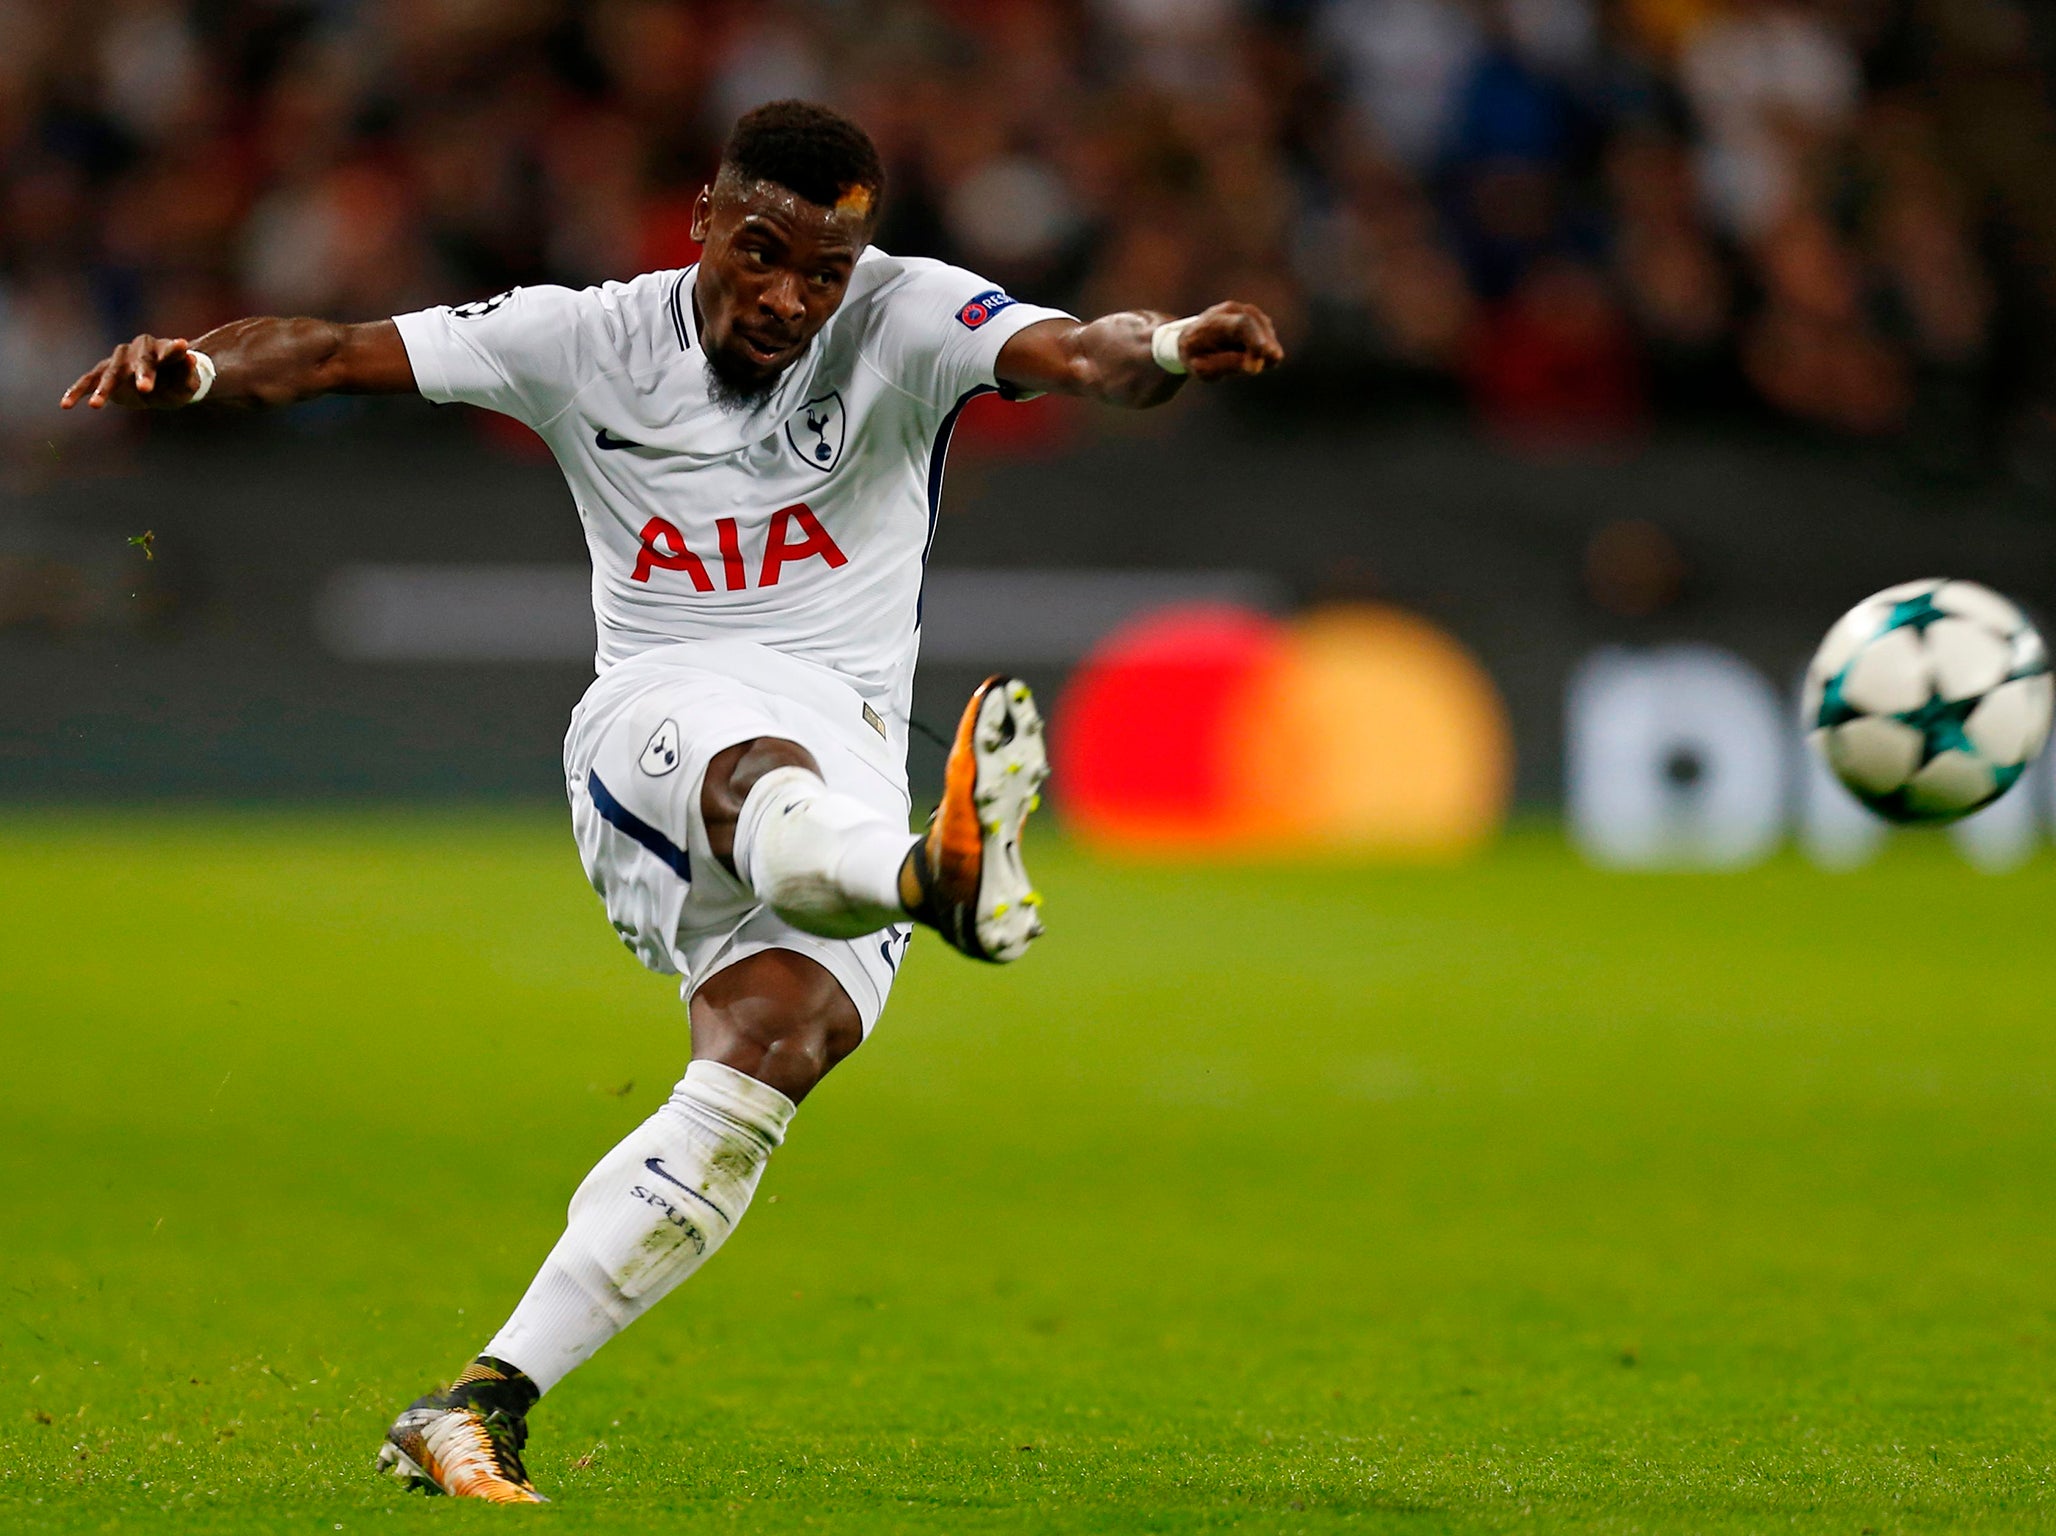 Aurier impressed on his Tottenham debut